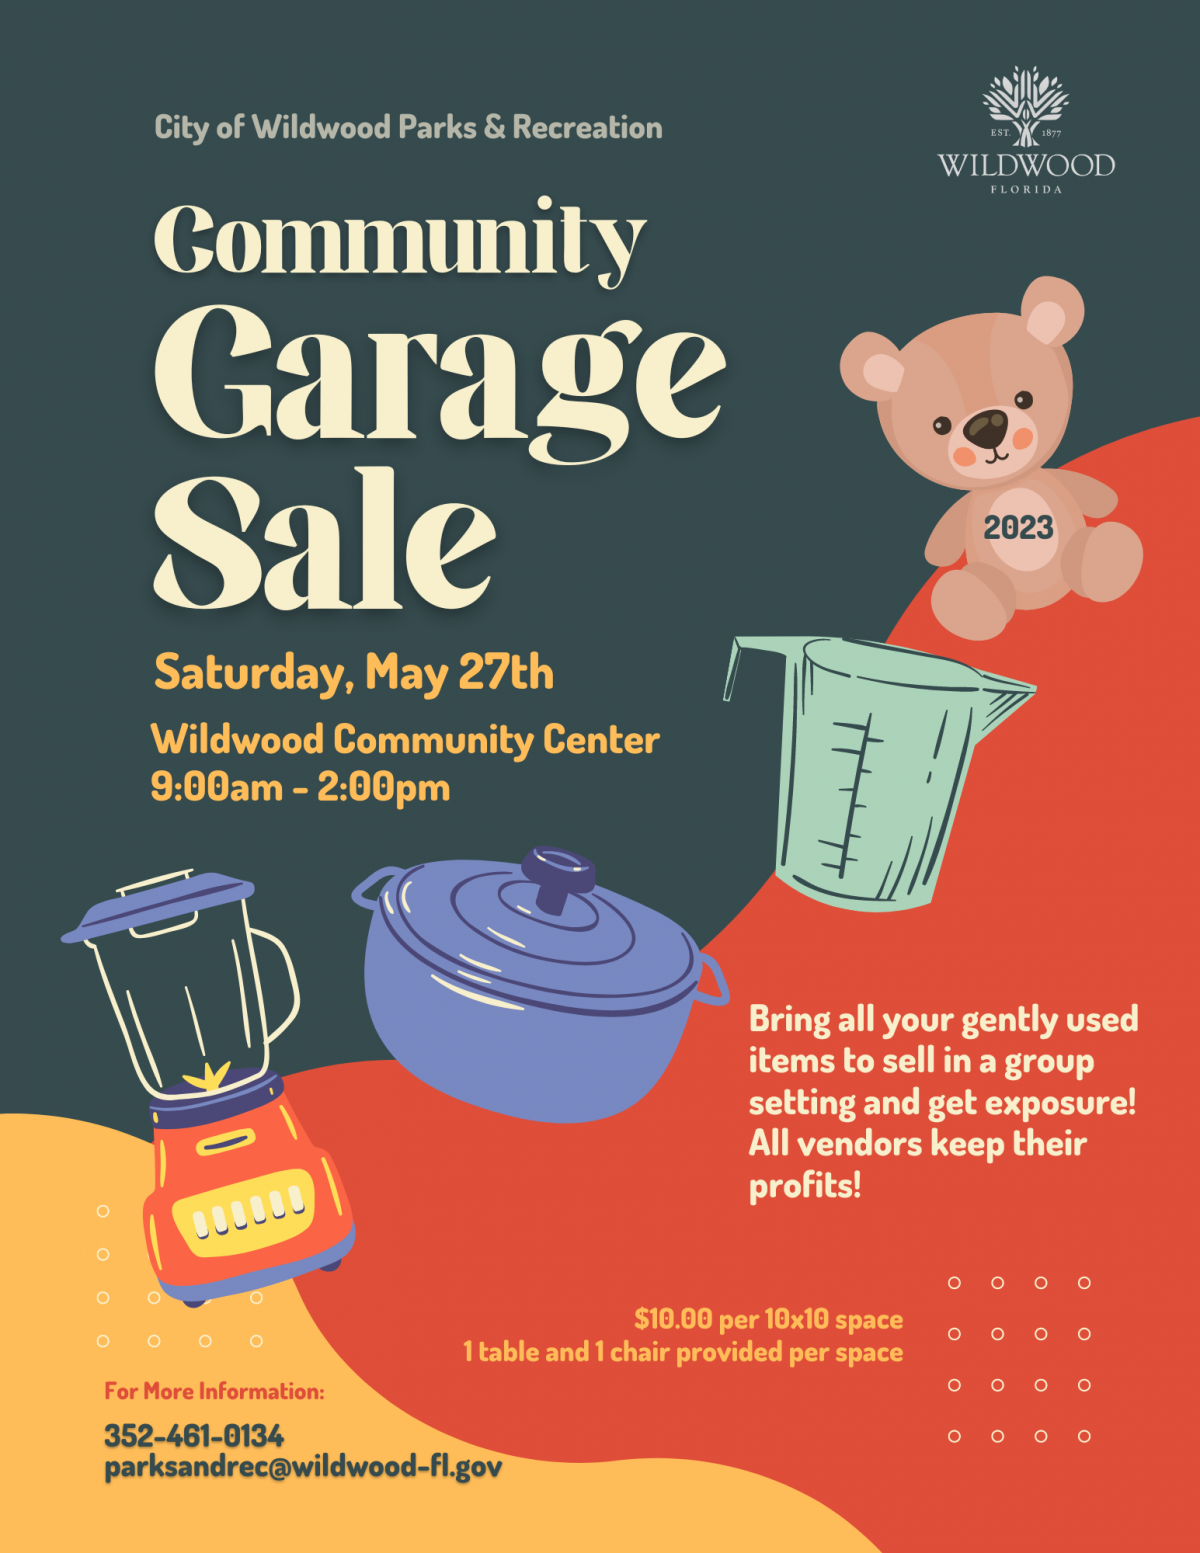 Community Garage Sale - May 27th at 9am